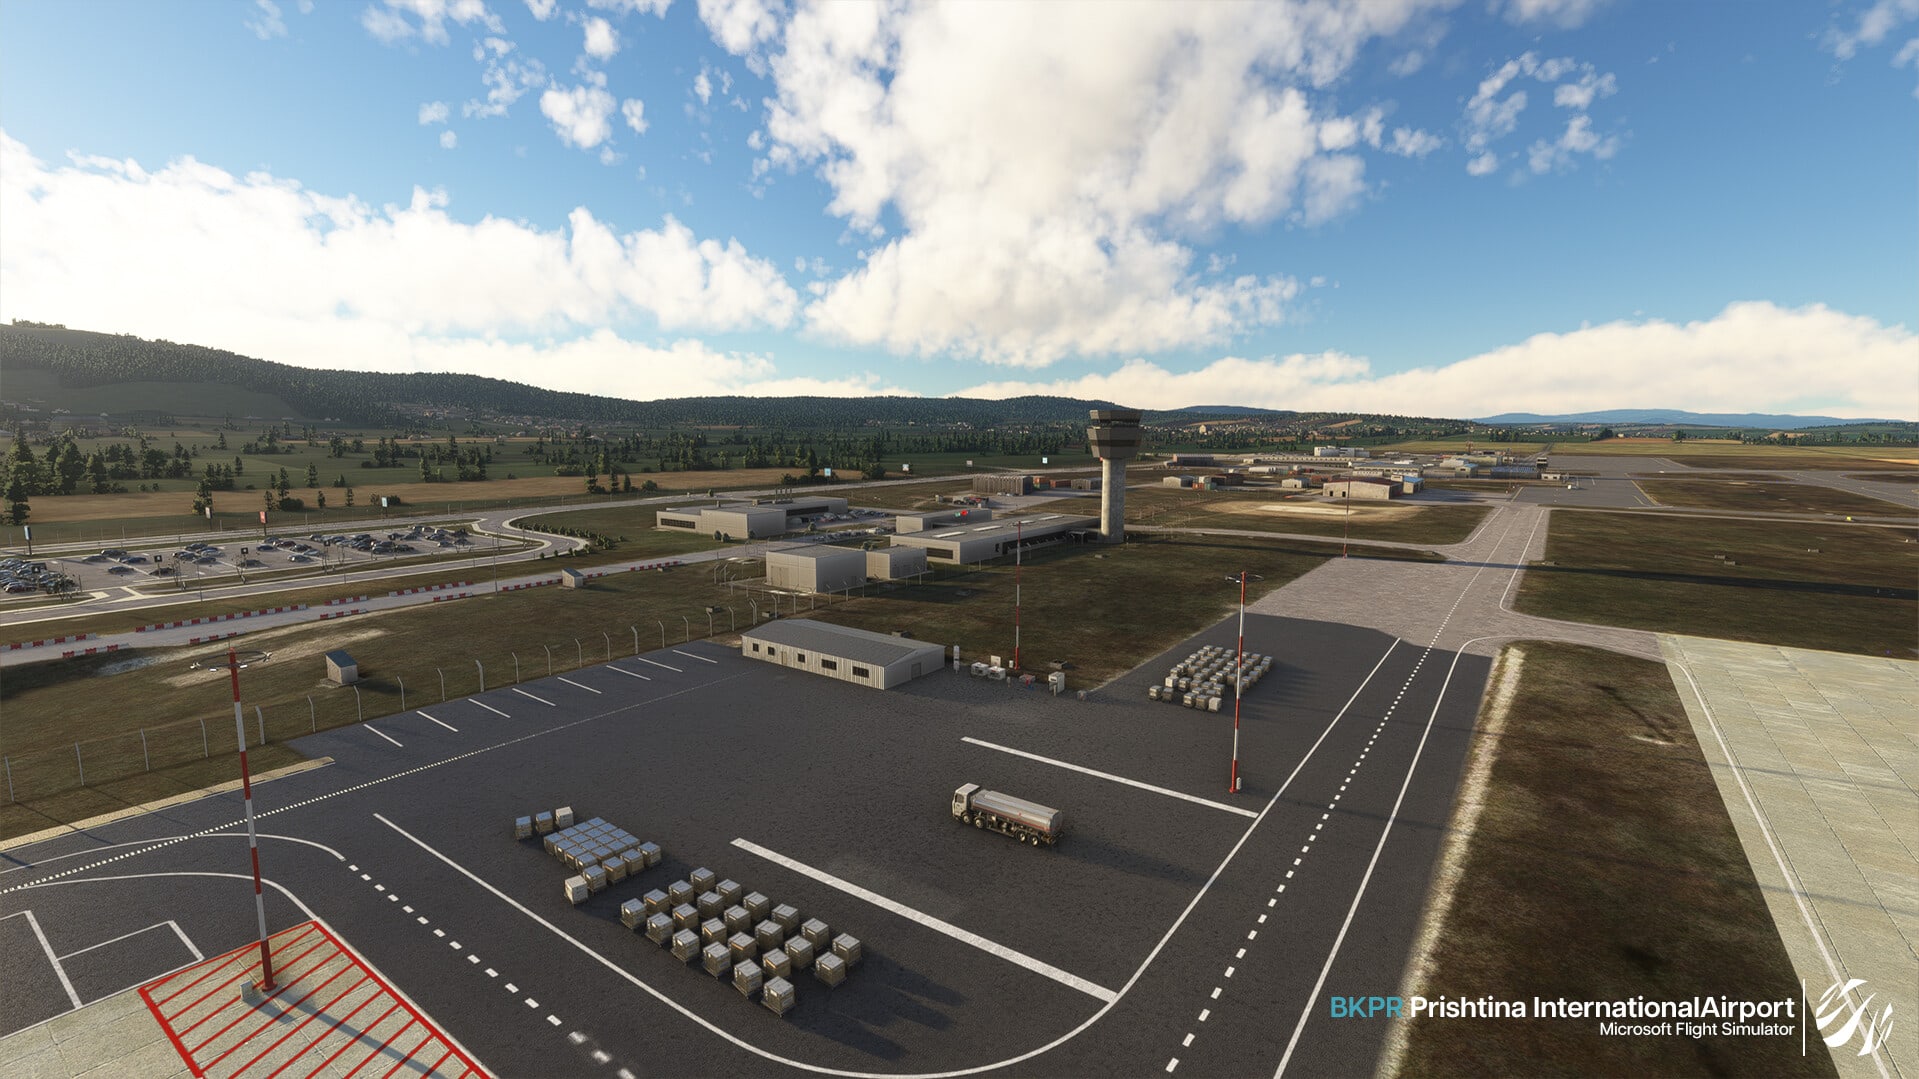 M'M Simulations Released Prishtina Airport for MSFS - M'M Simulations